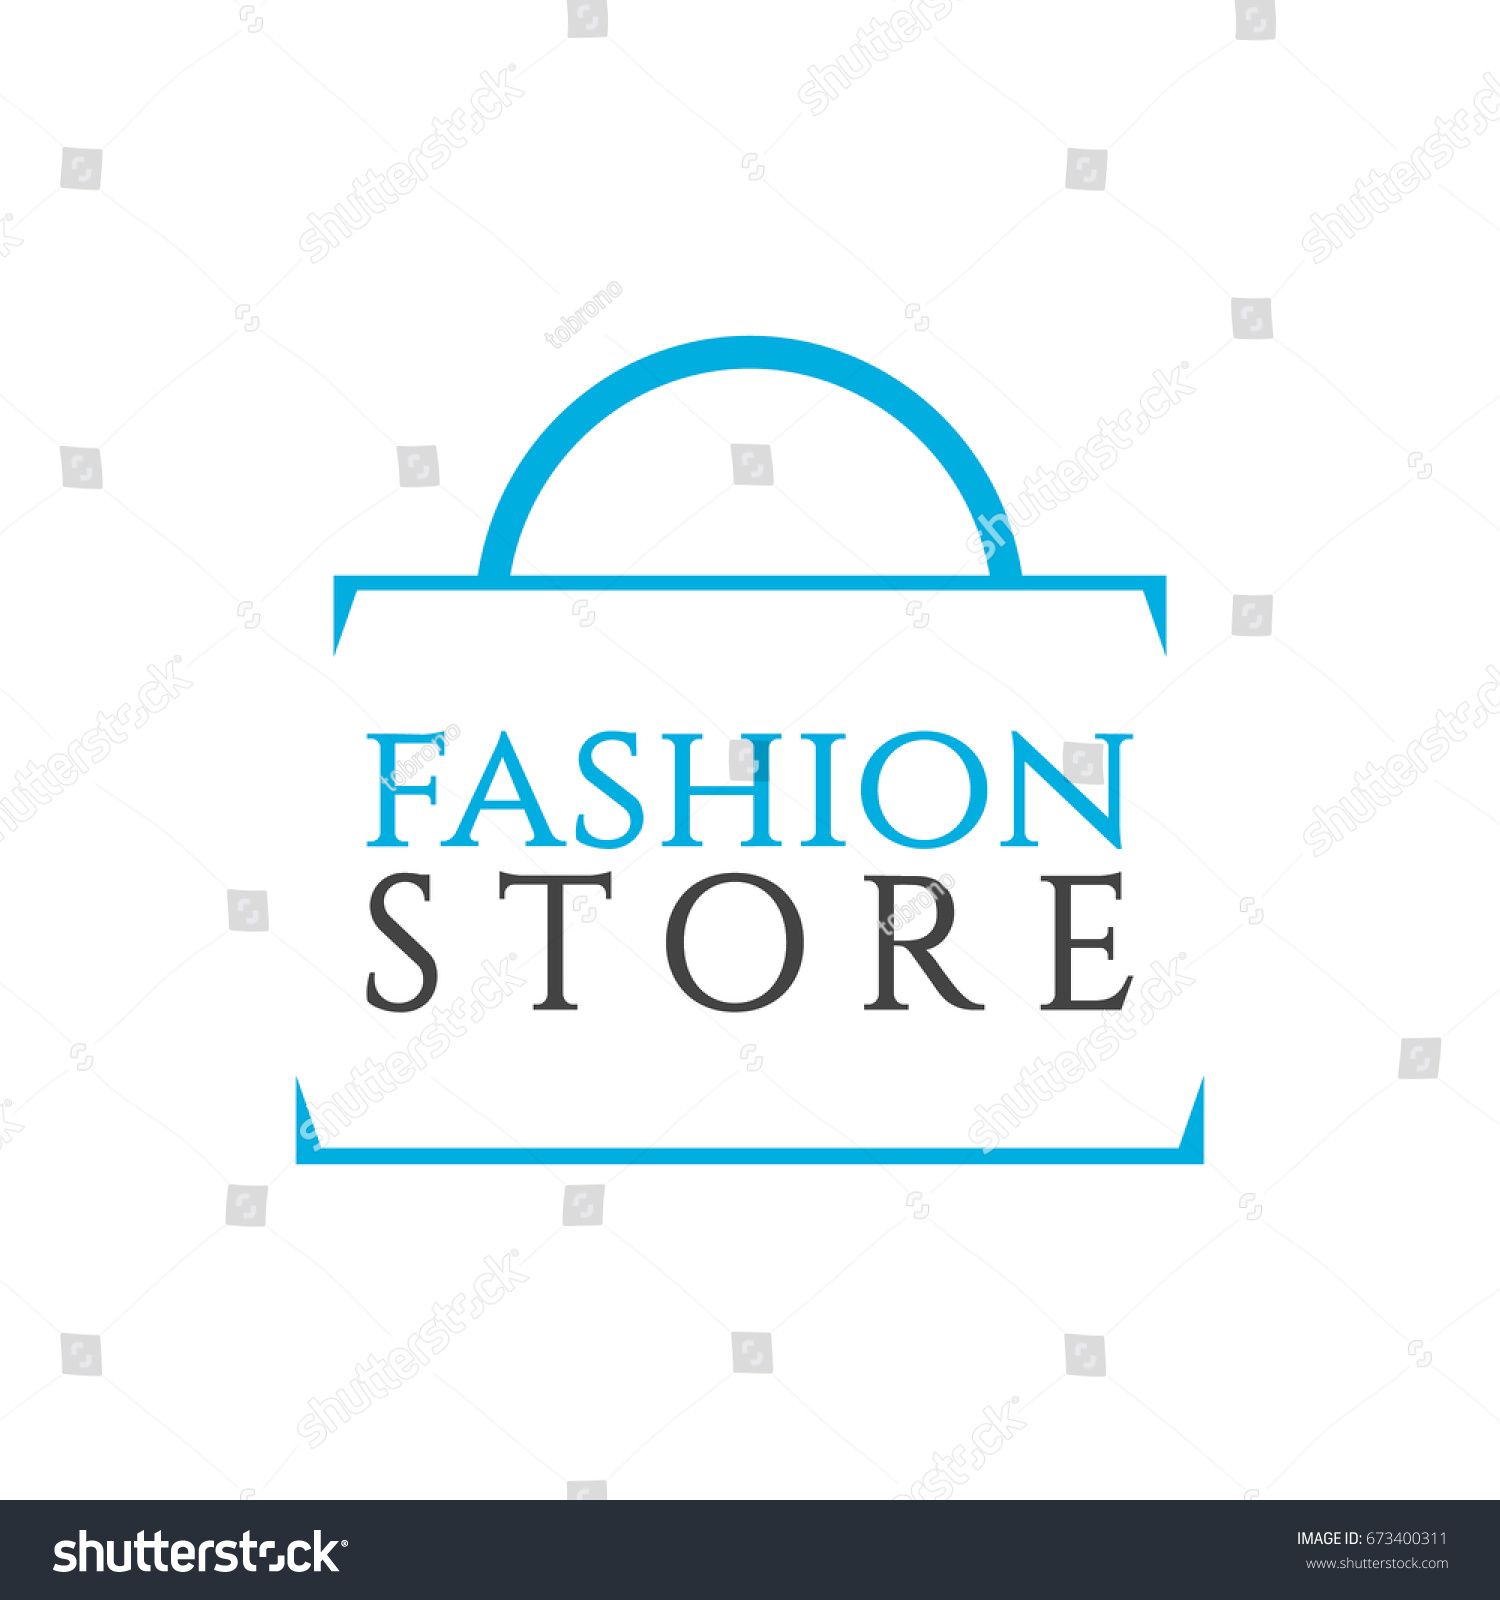 Fashion Store Logo Vector Template Stock Vector 673400311 - Shutterstock